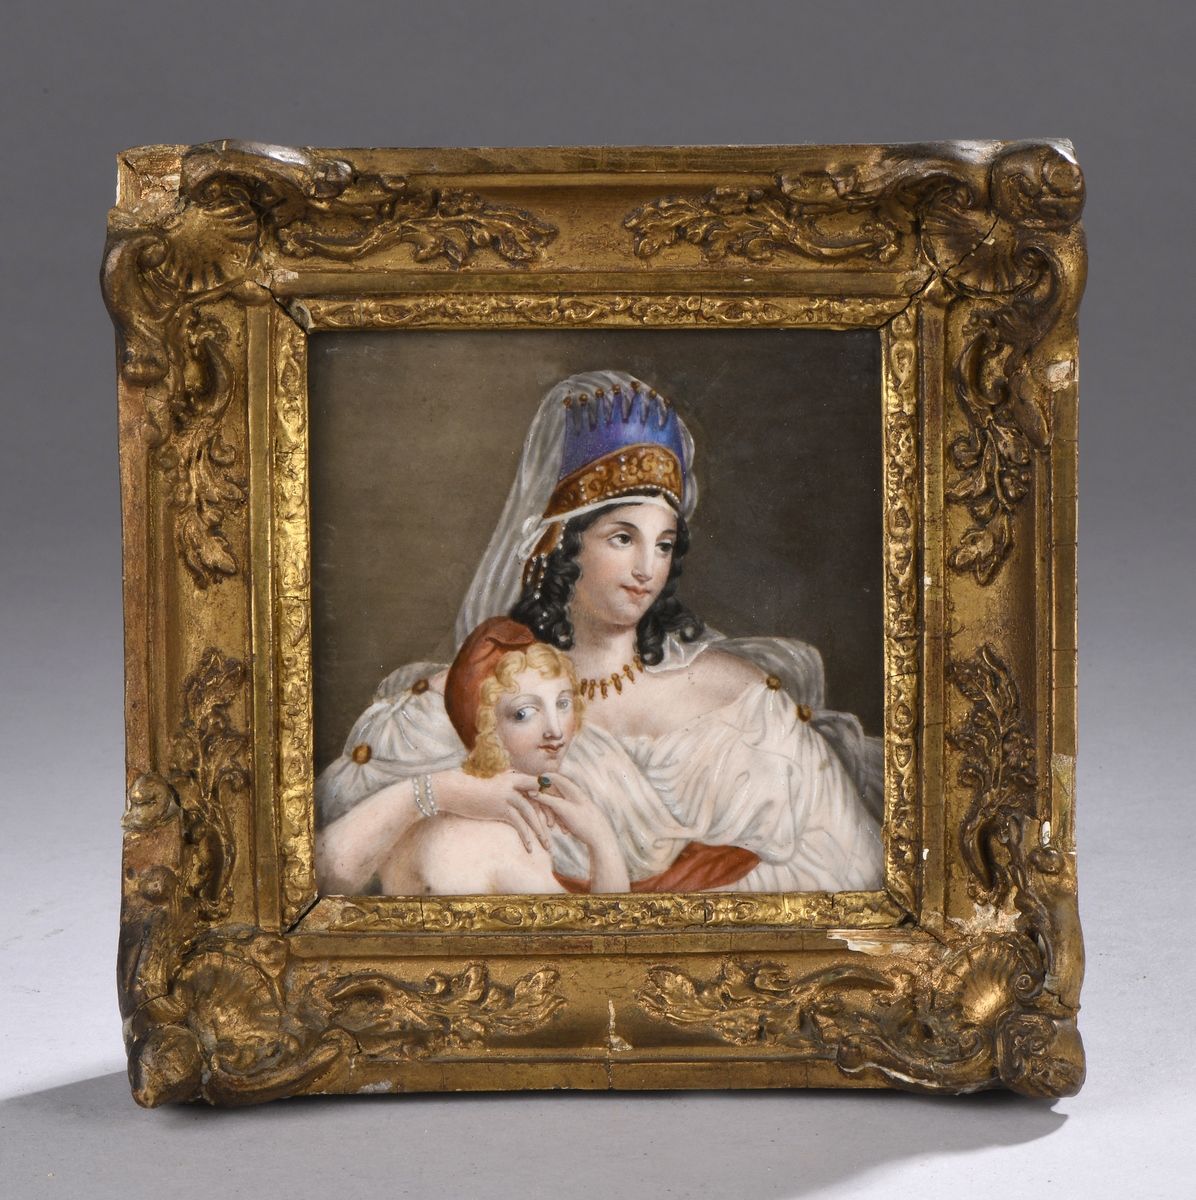 Null 维尔-艾尔莎（？）
活跃于19世纪上半叶

女王和她的小儿子

瓷器上的绘画
左侧有签名，日期为1839年

H.11 - W. 11 cm